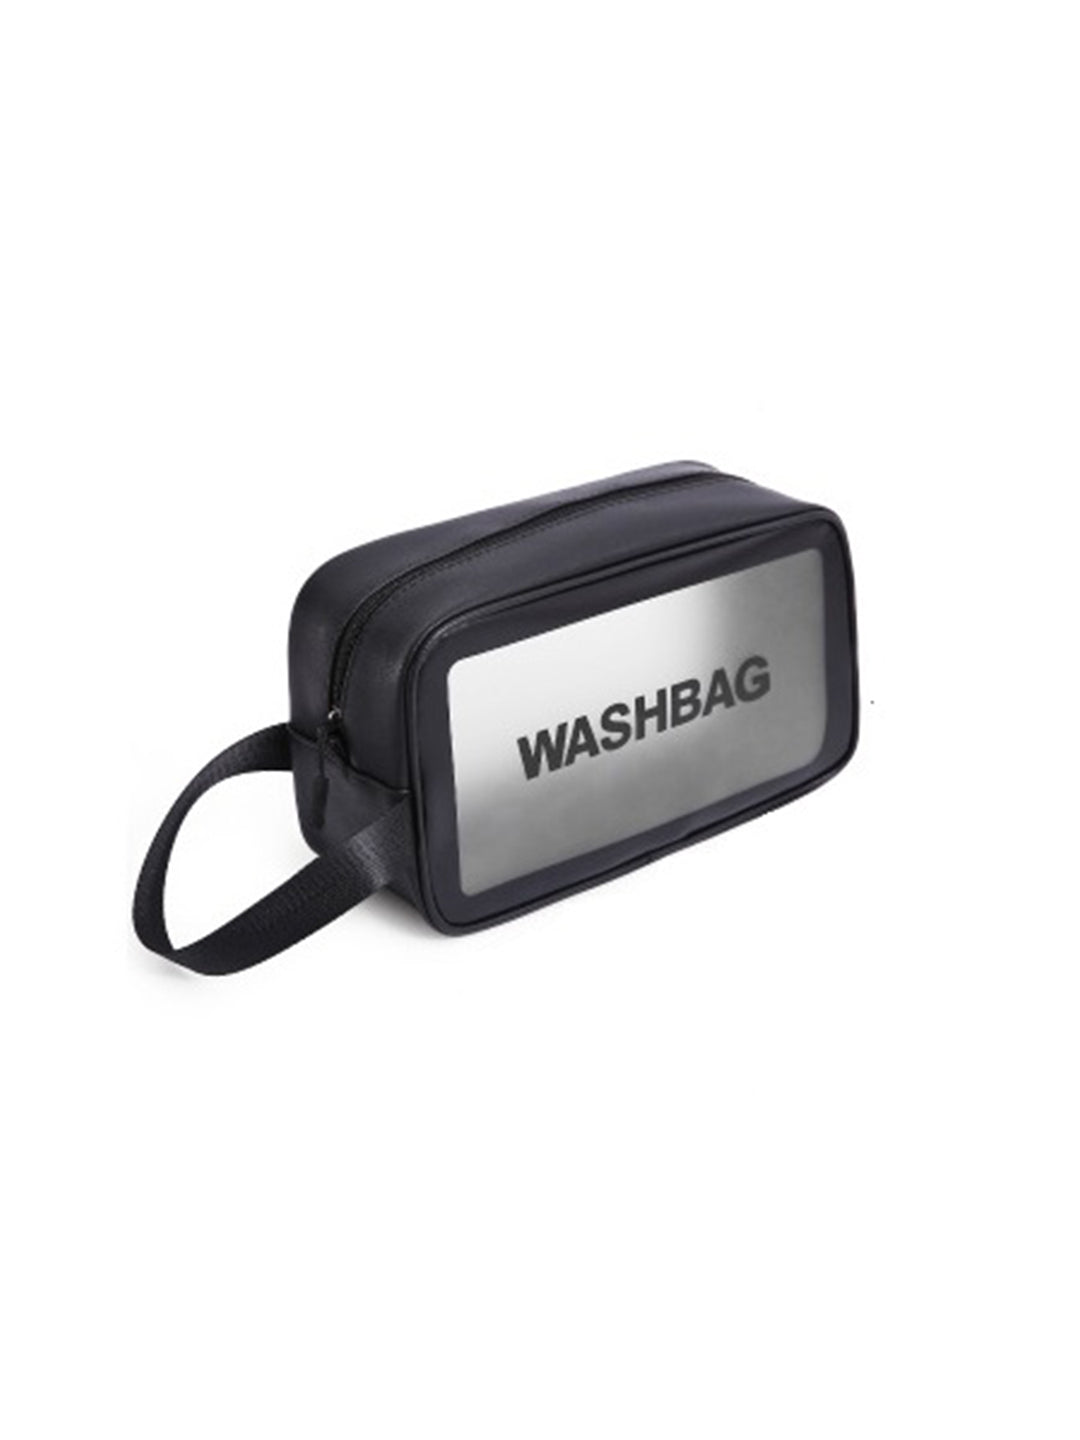 VON CASA Portable Zipper Travel Toiletry Bag - Black 